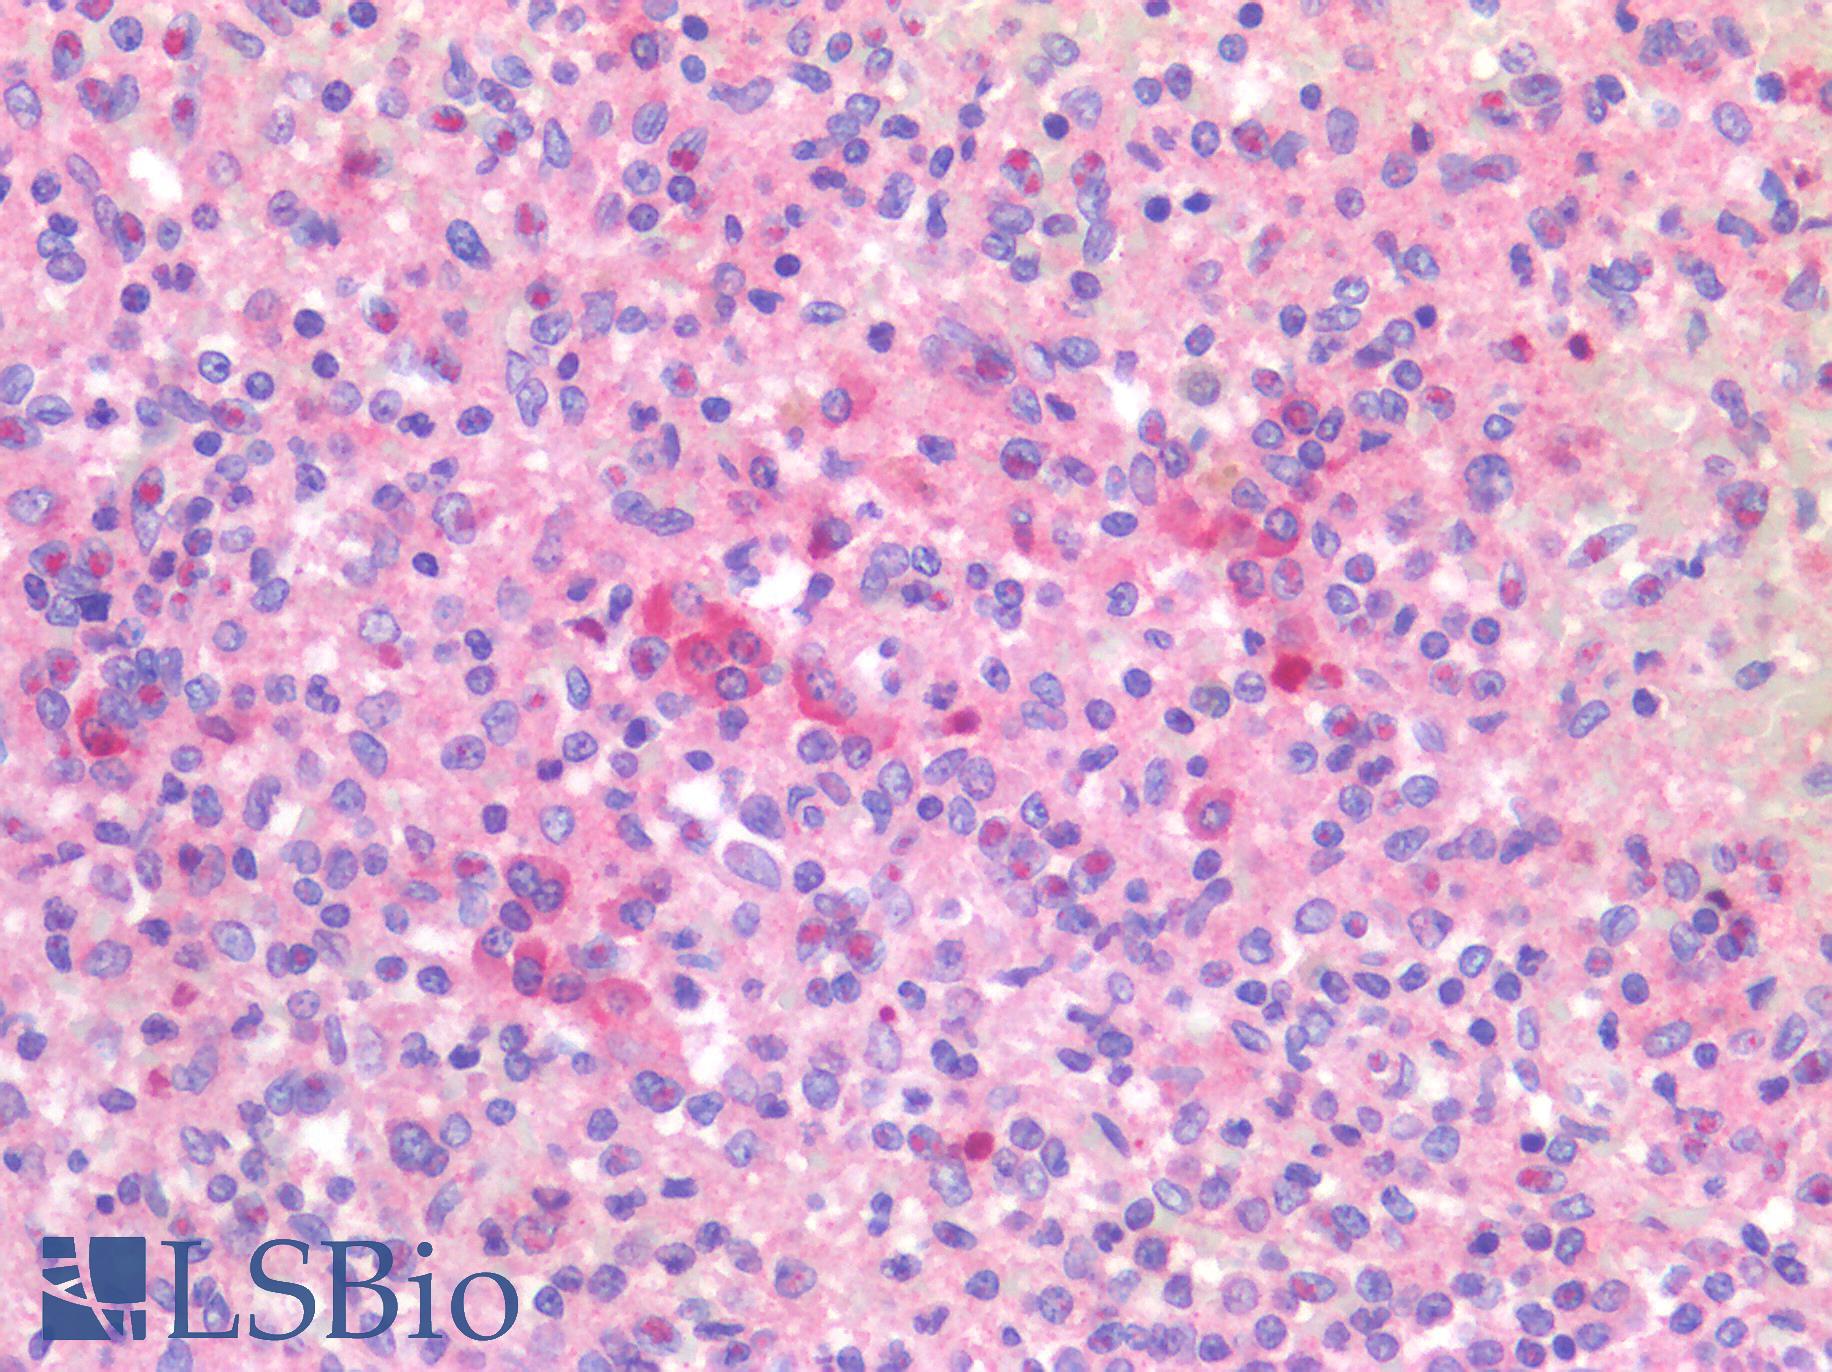 CD40 Antibody - Human Spleen: Formalin-Fixed, Paraffin-Embedded (FFPE)